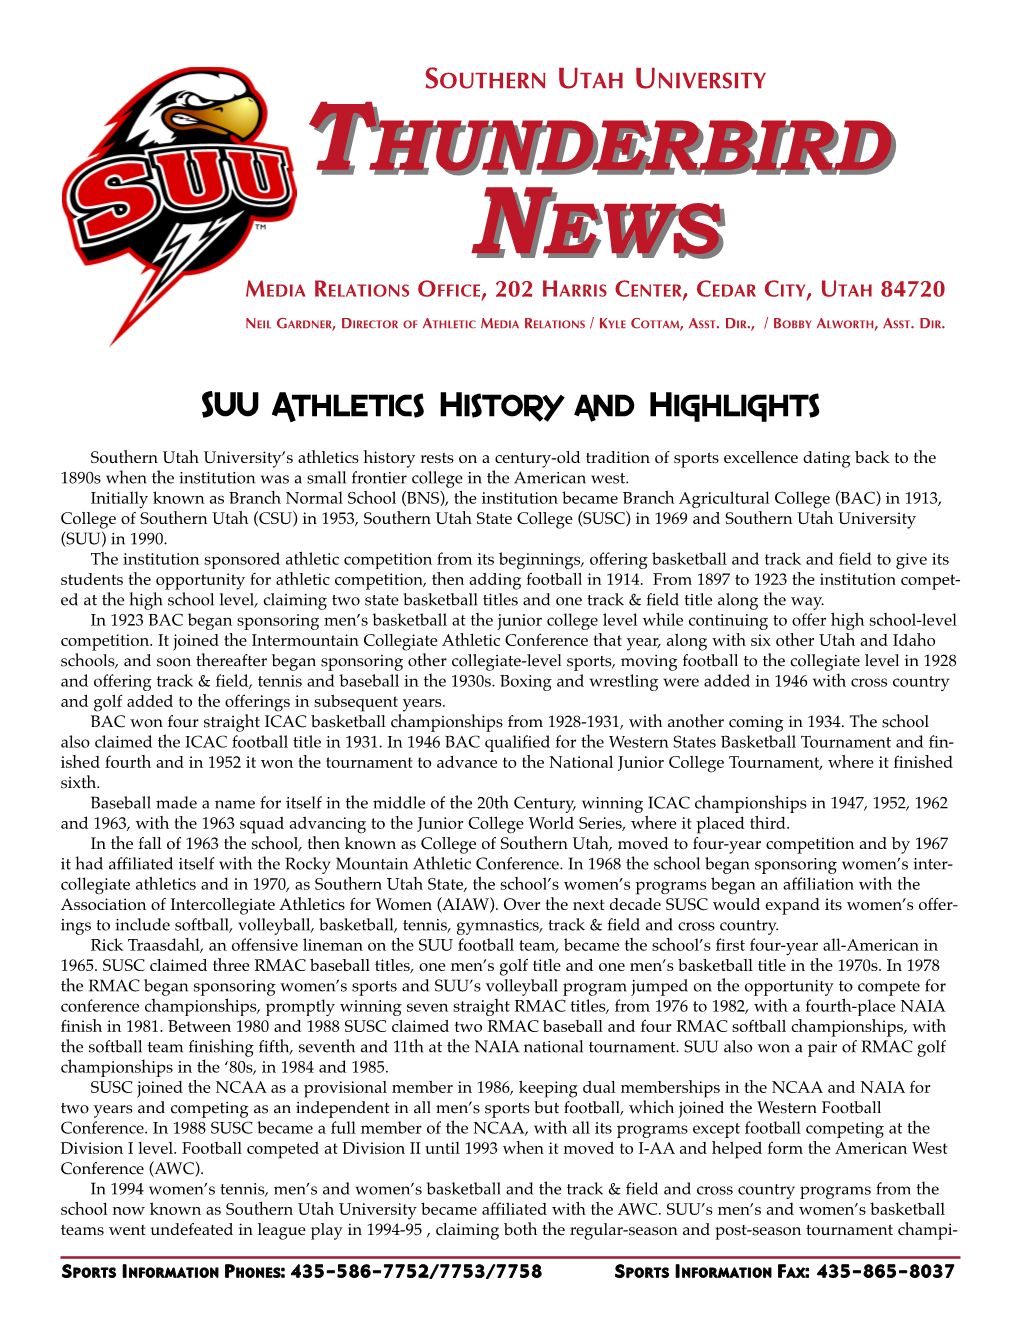 SUU Athletics History Layout 1